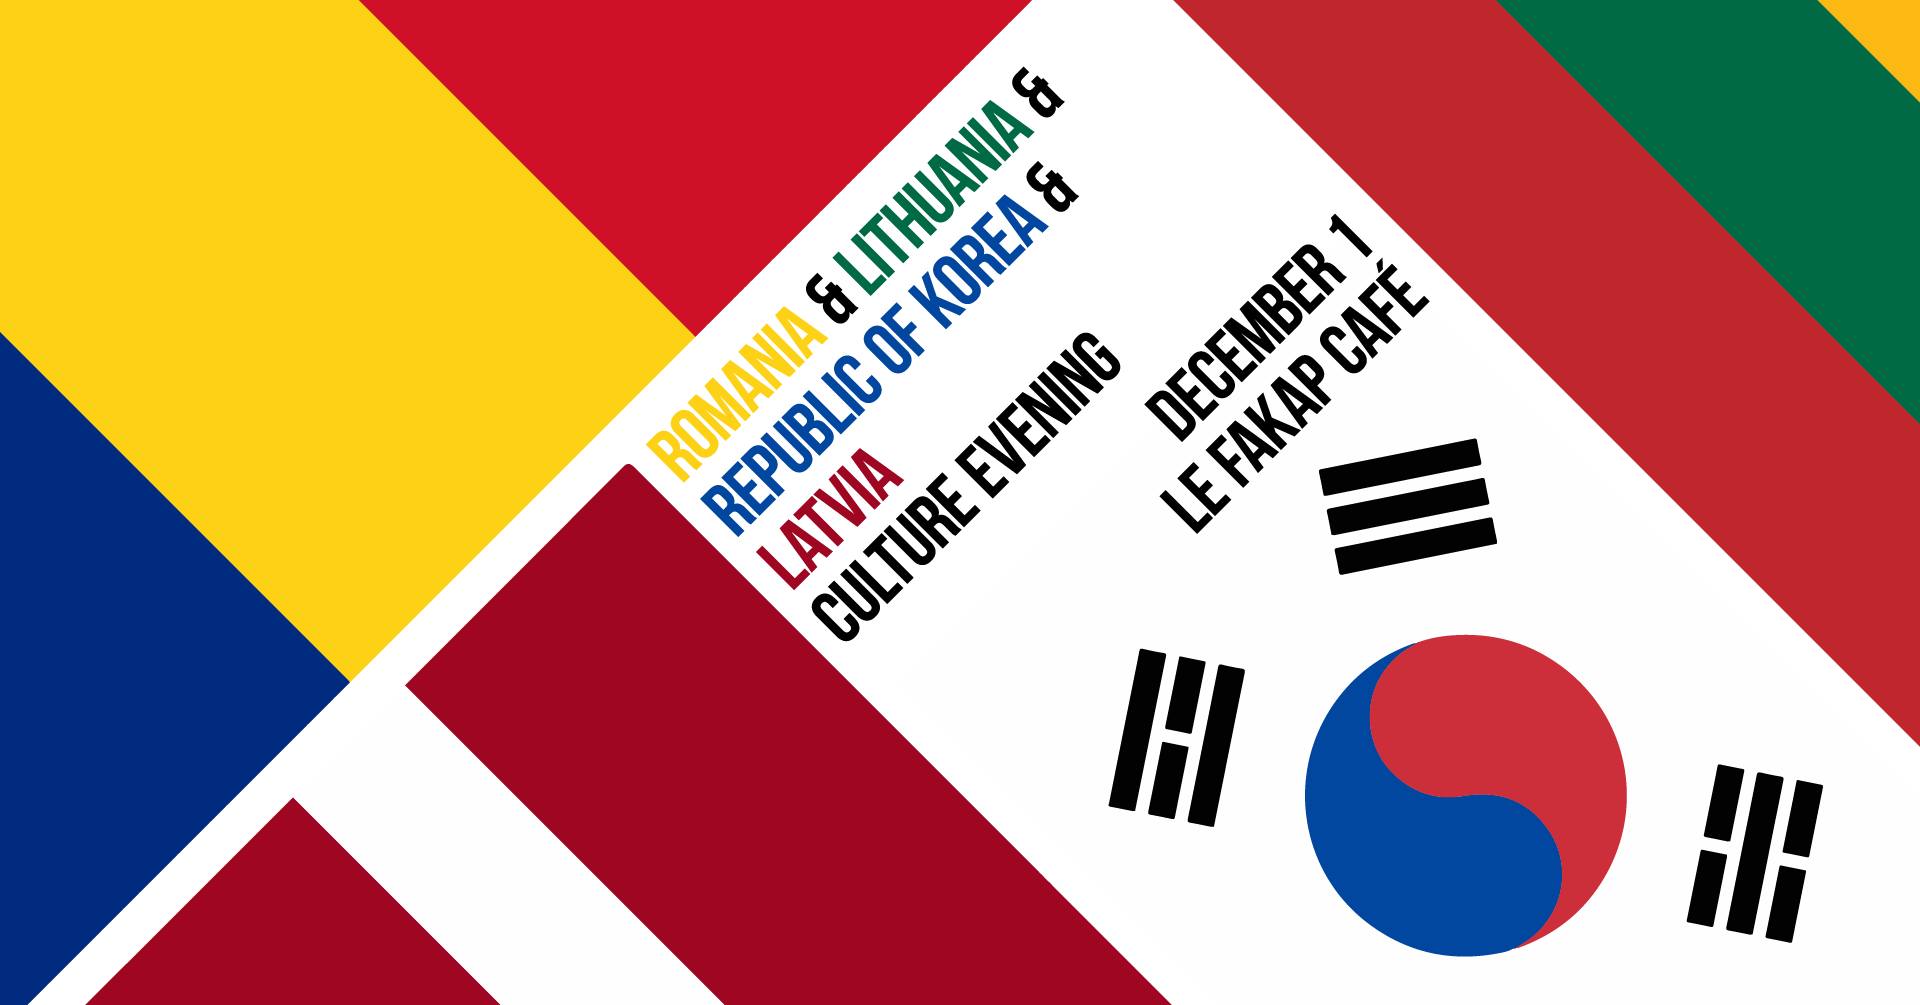 ISC Romania, Republic of Korea and Latvia culture evening